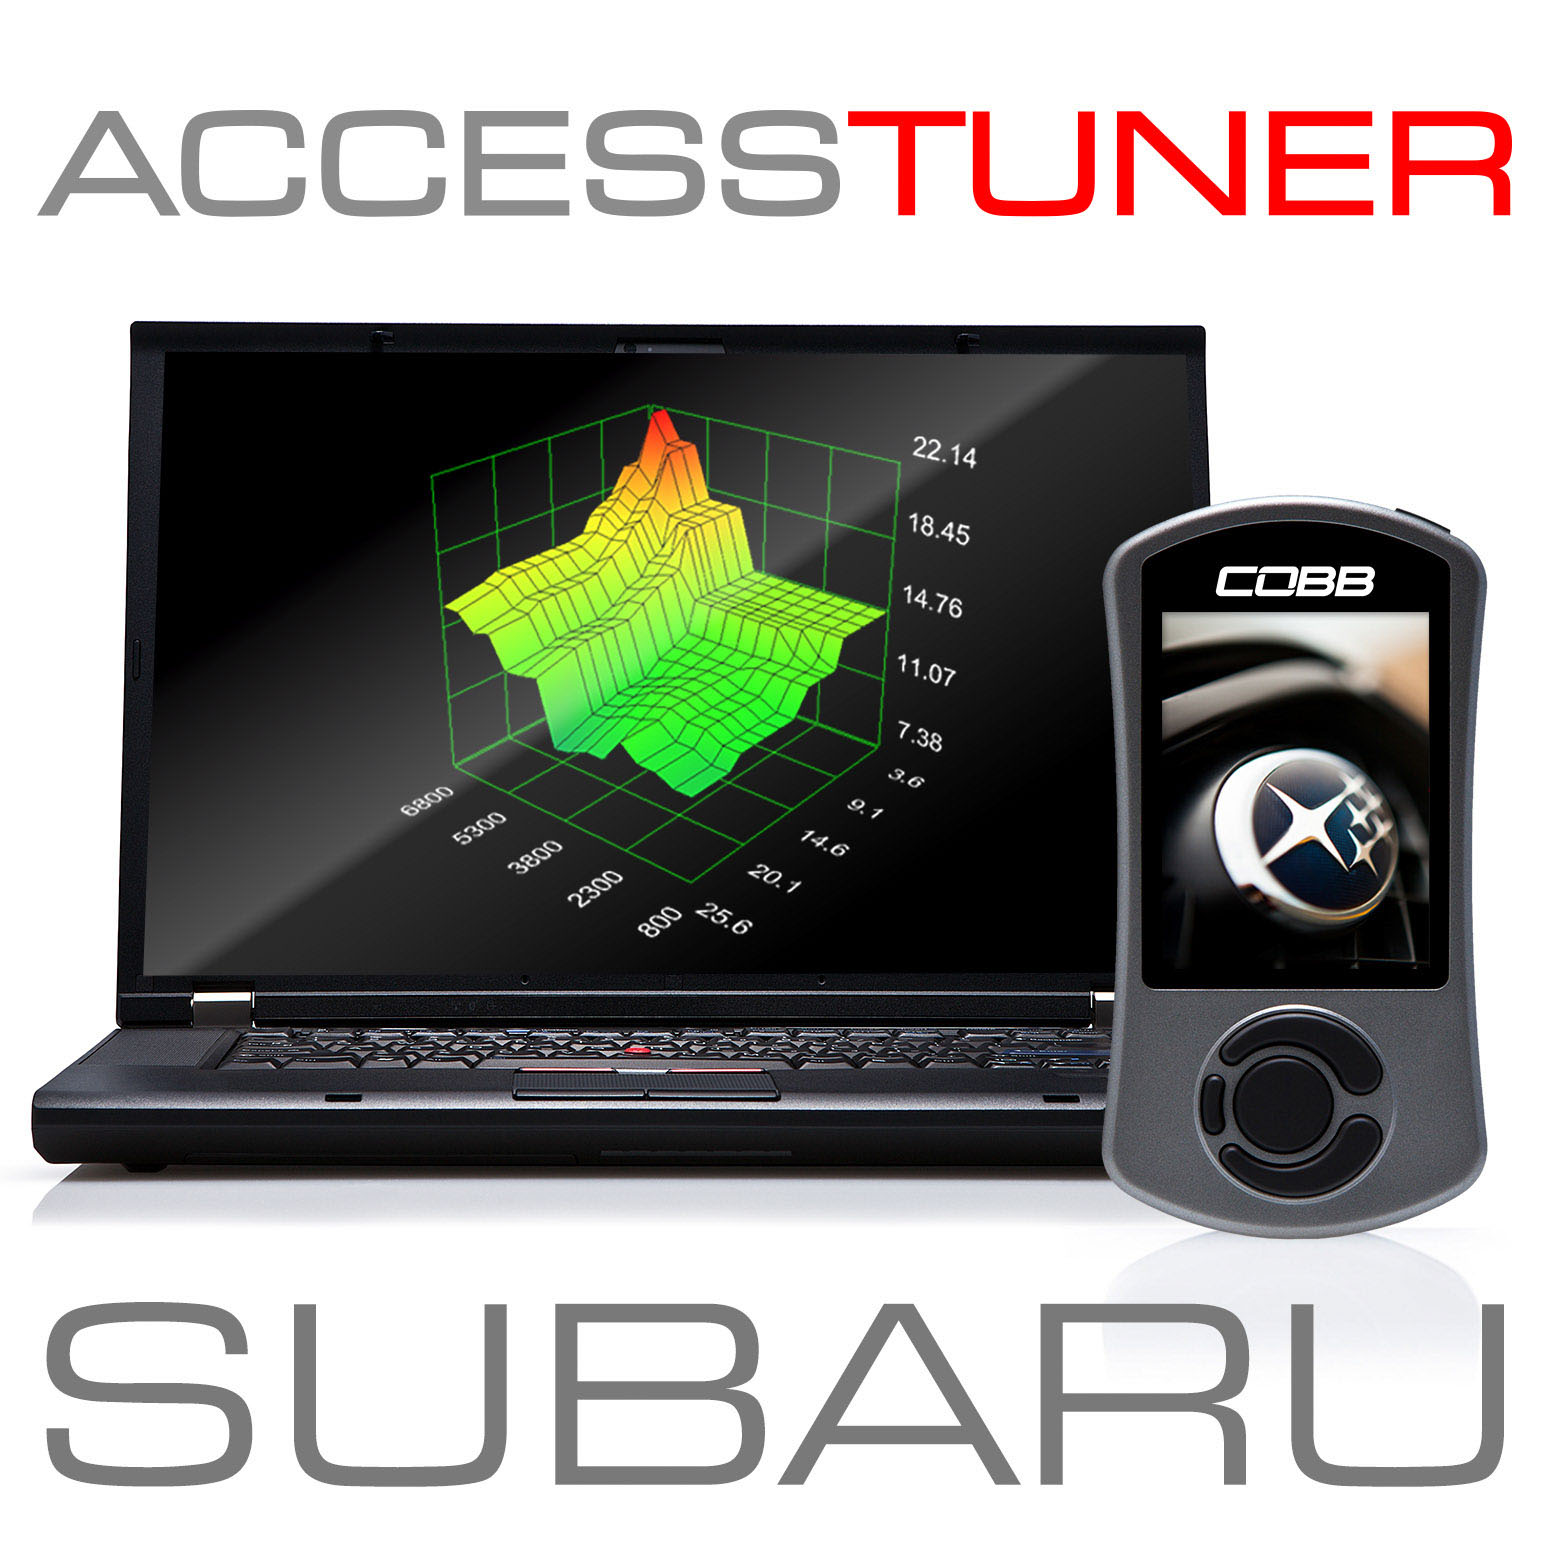 accesstuner software download